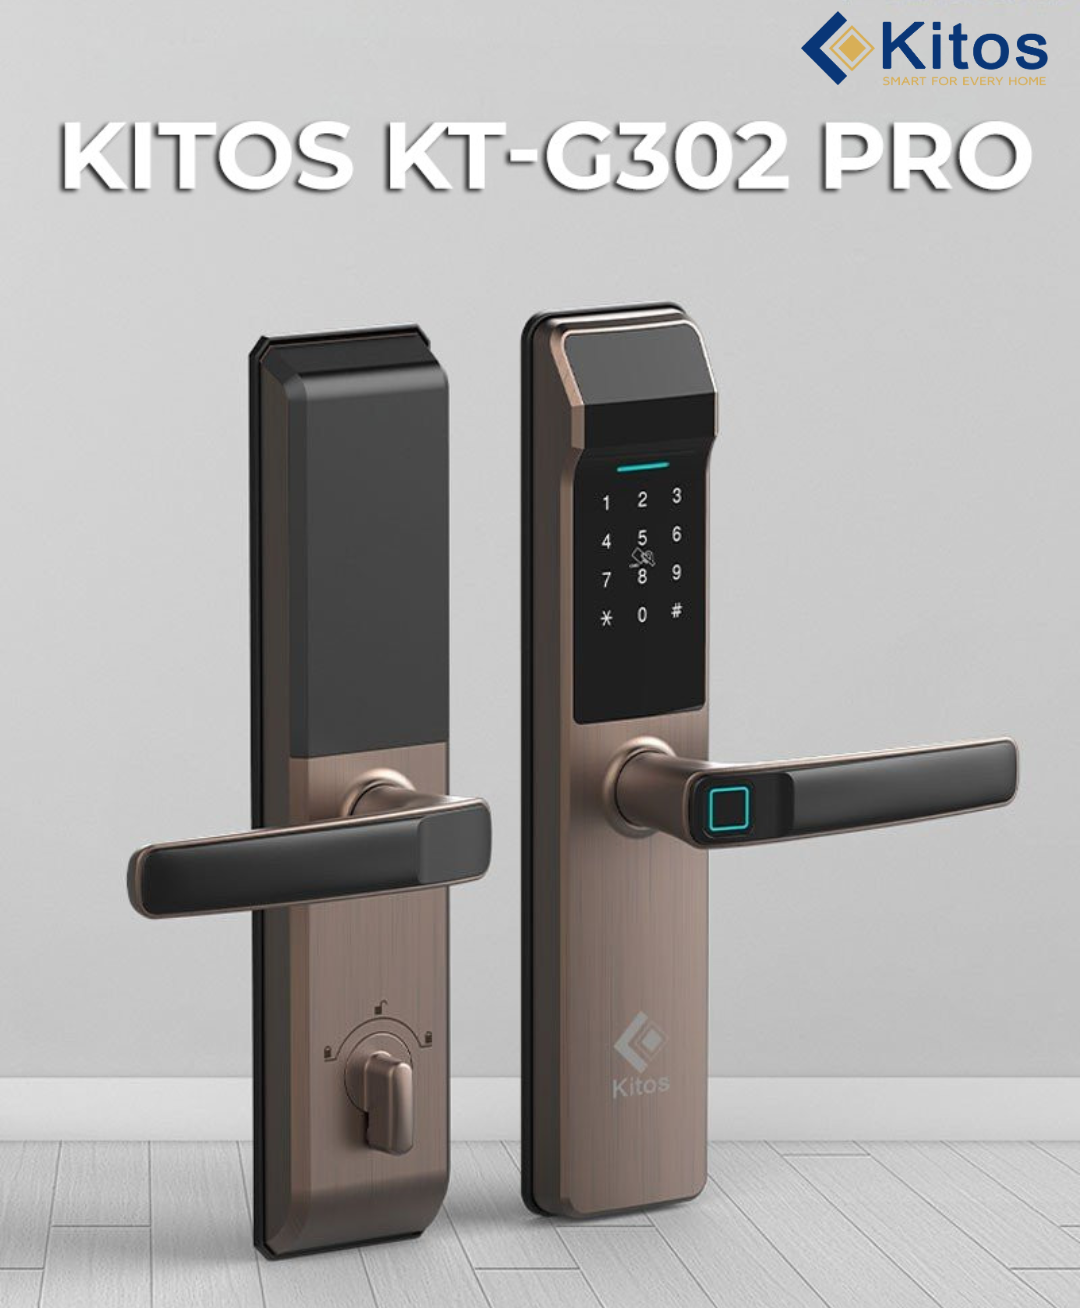 Kitos-KT-G302-Pro-2.png